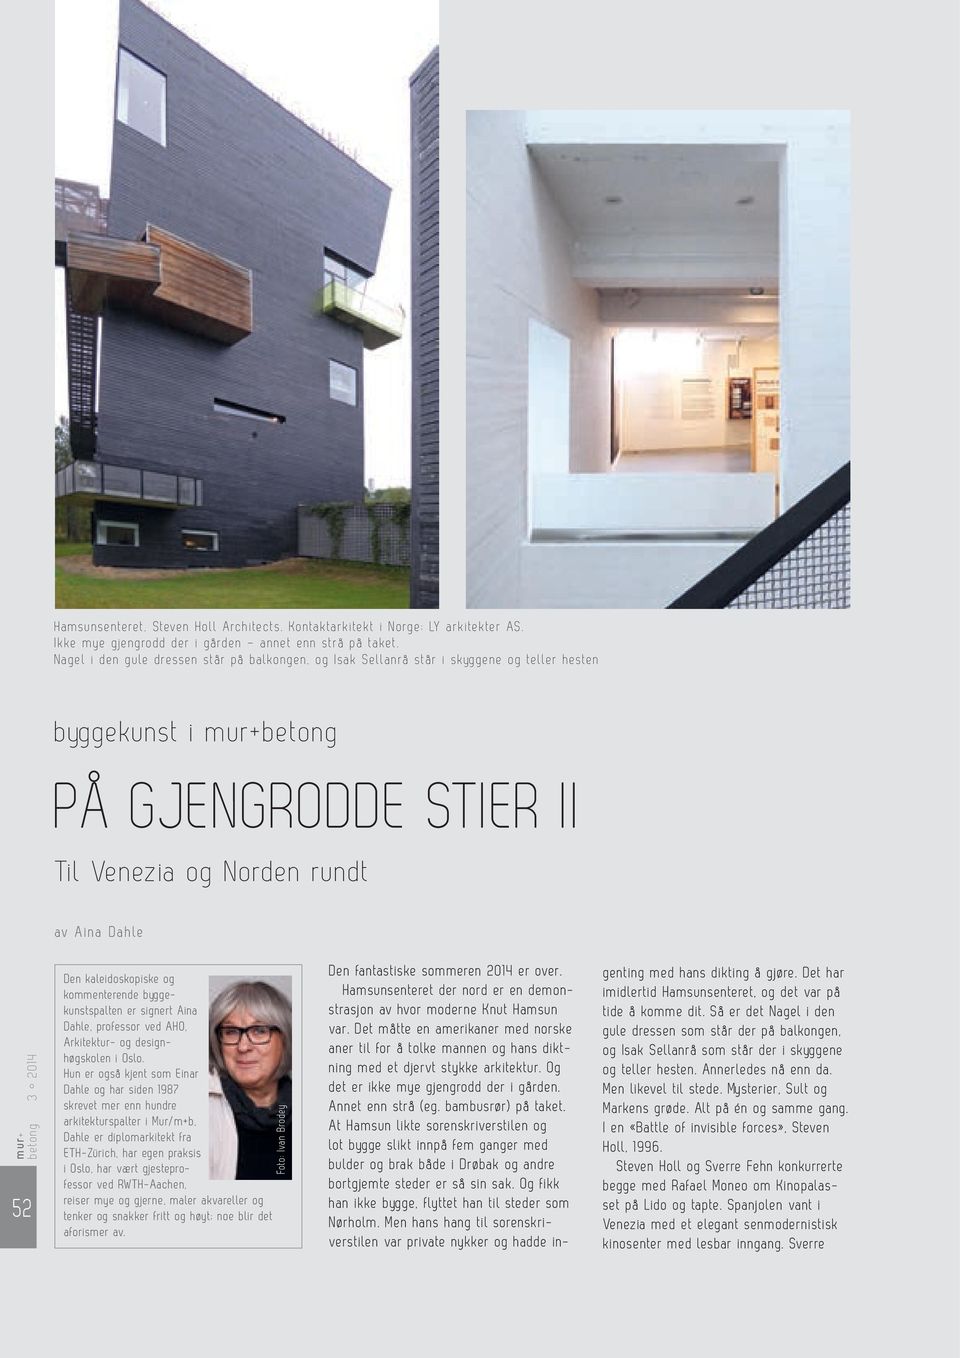 skopiske og kommen terende bygge - kunstspalten er signert Aina Dahle, professor ved AHO, Arkitektur- og designhøgskolen i Oslo.